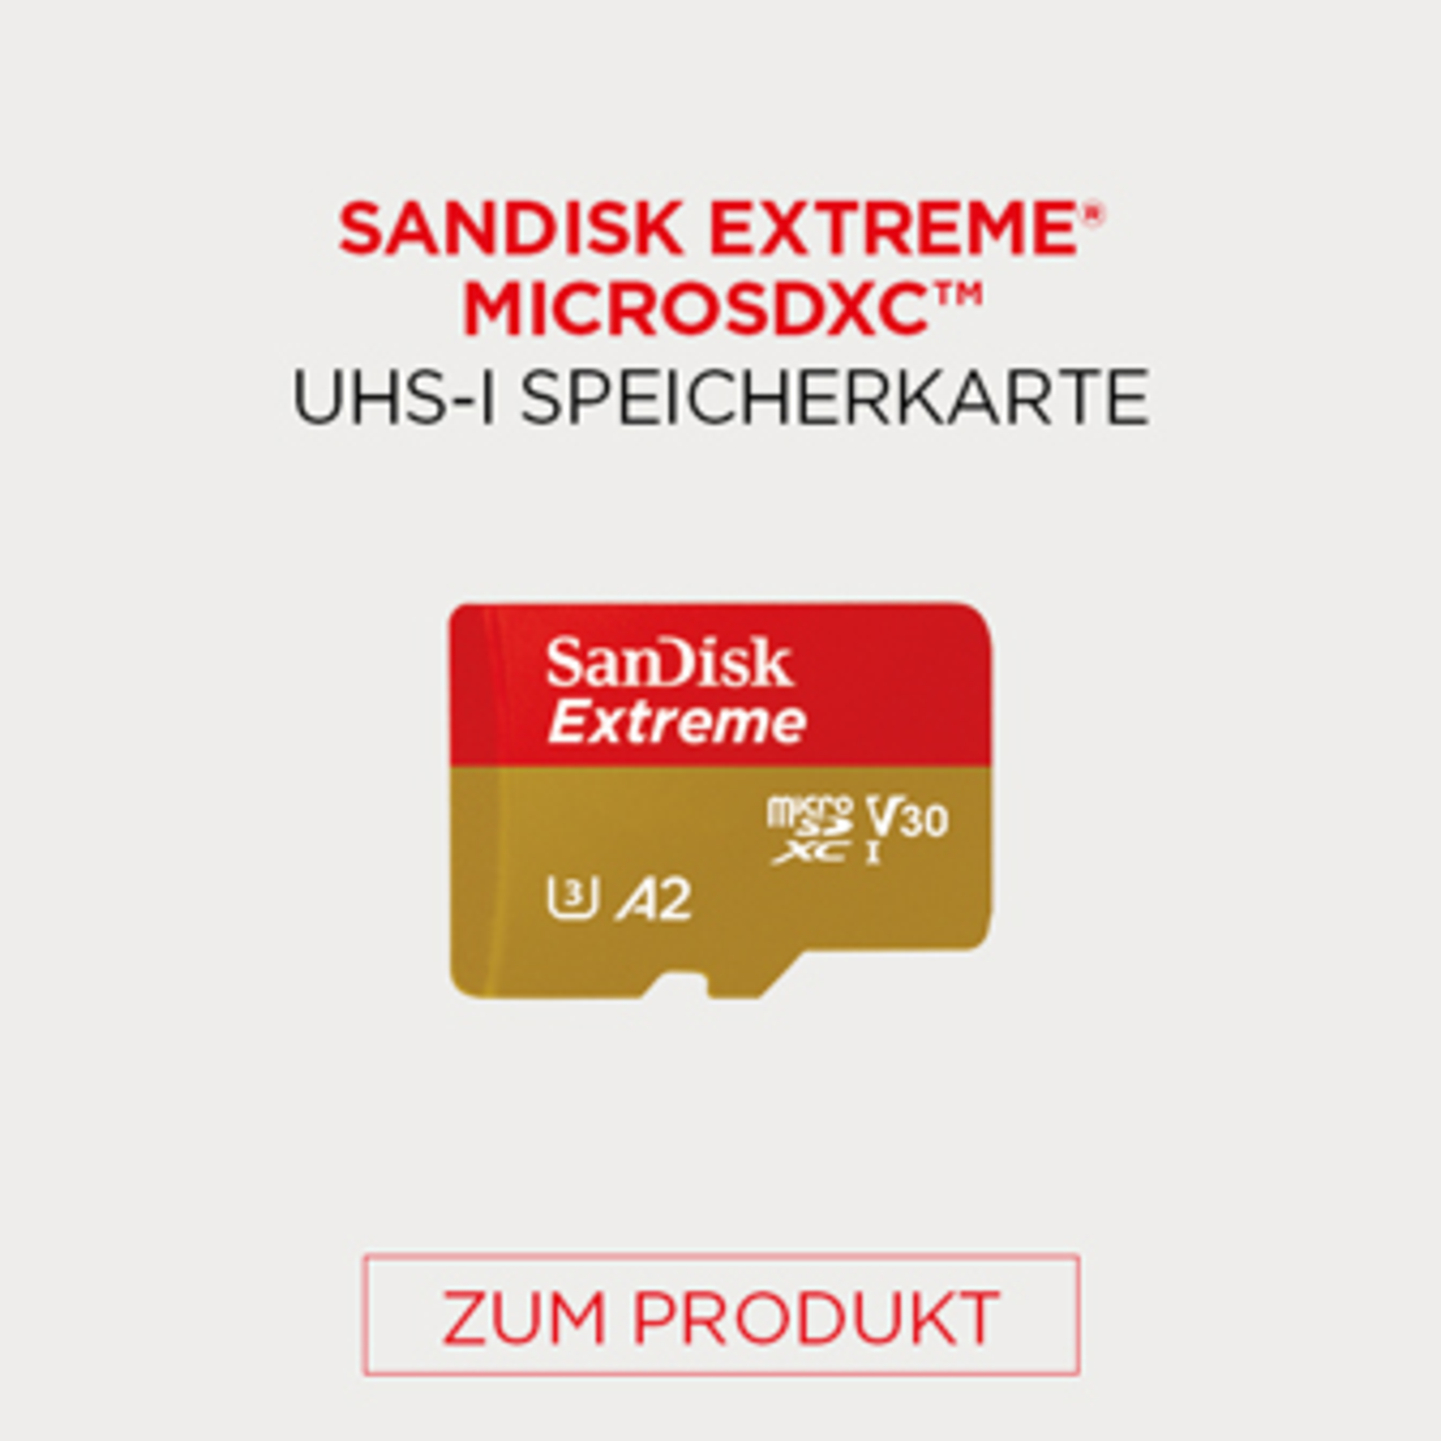 Sandisk Extreme MICROSDXC UHS-I Speicherkarte